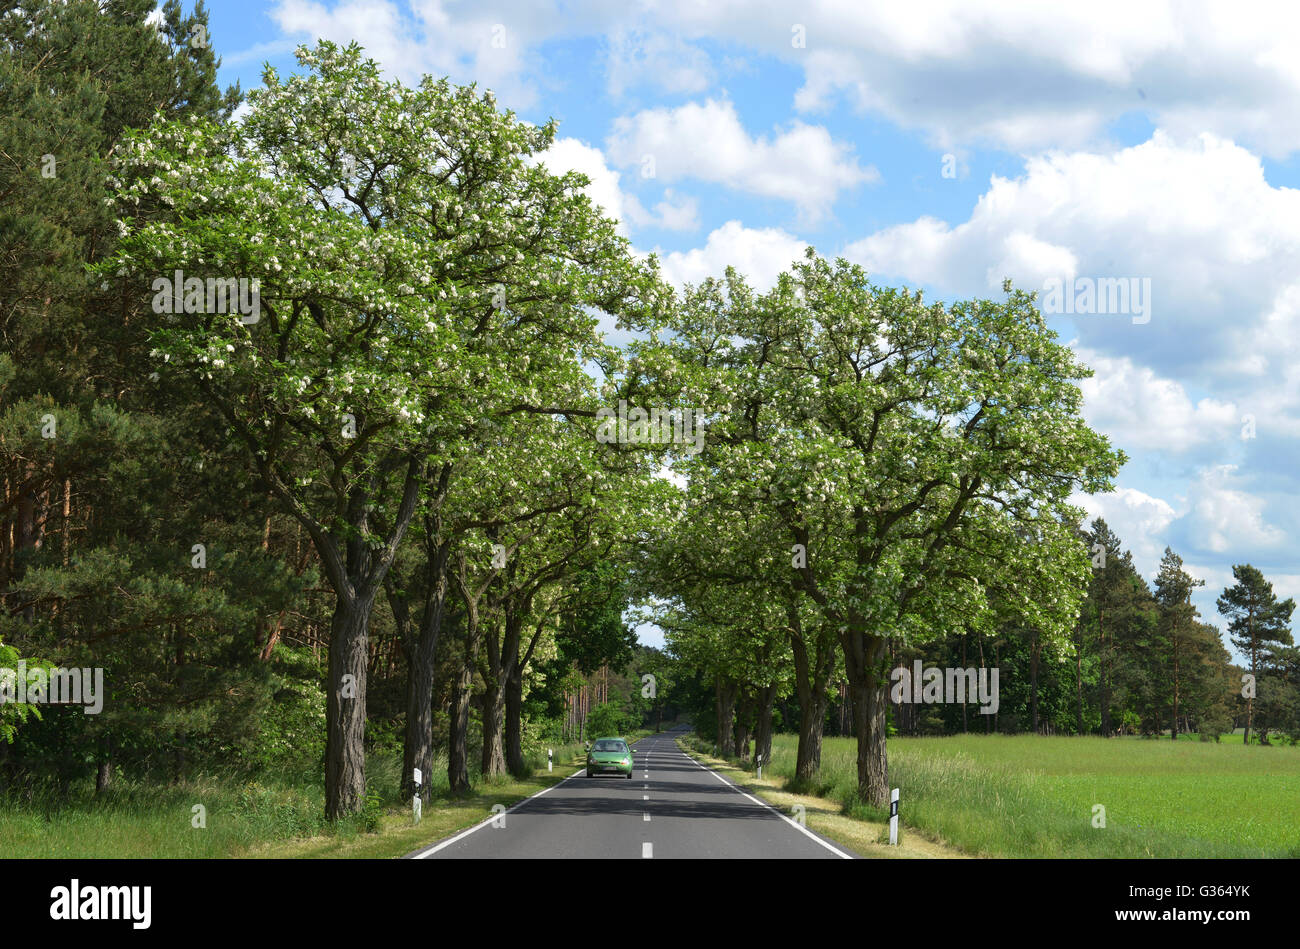 Avenue, county road, L88, Brandenburg, Germany Stock Photo